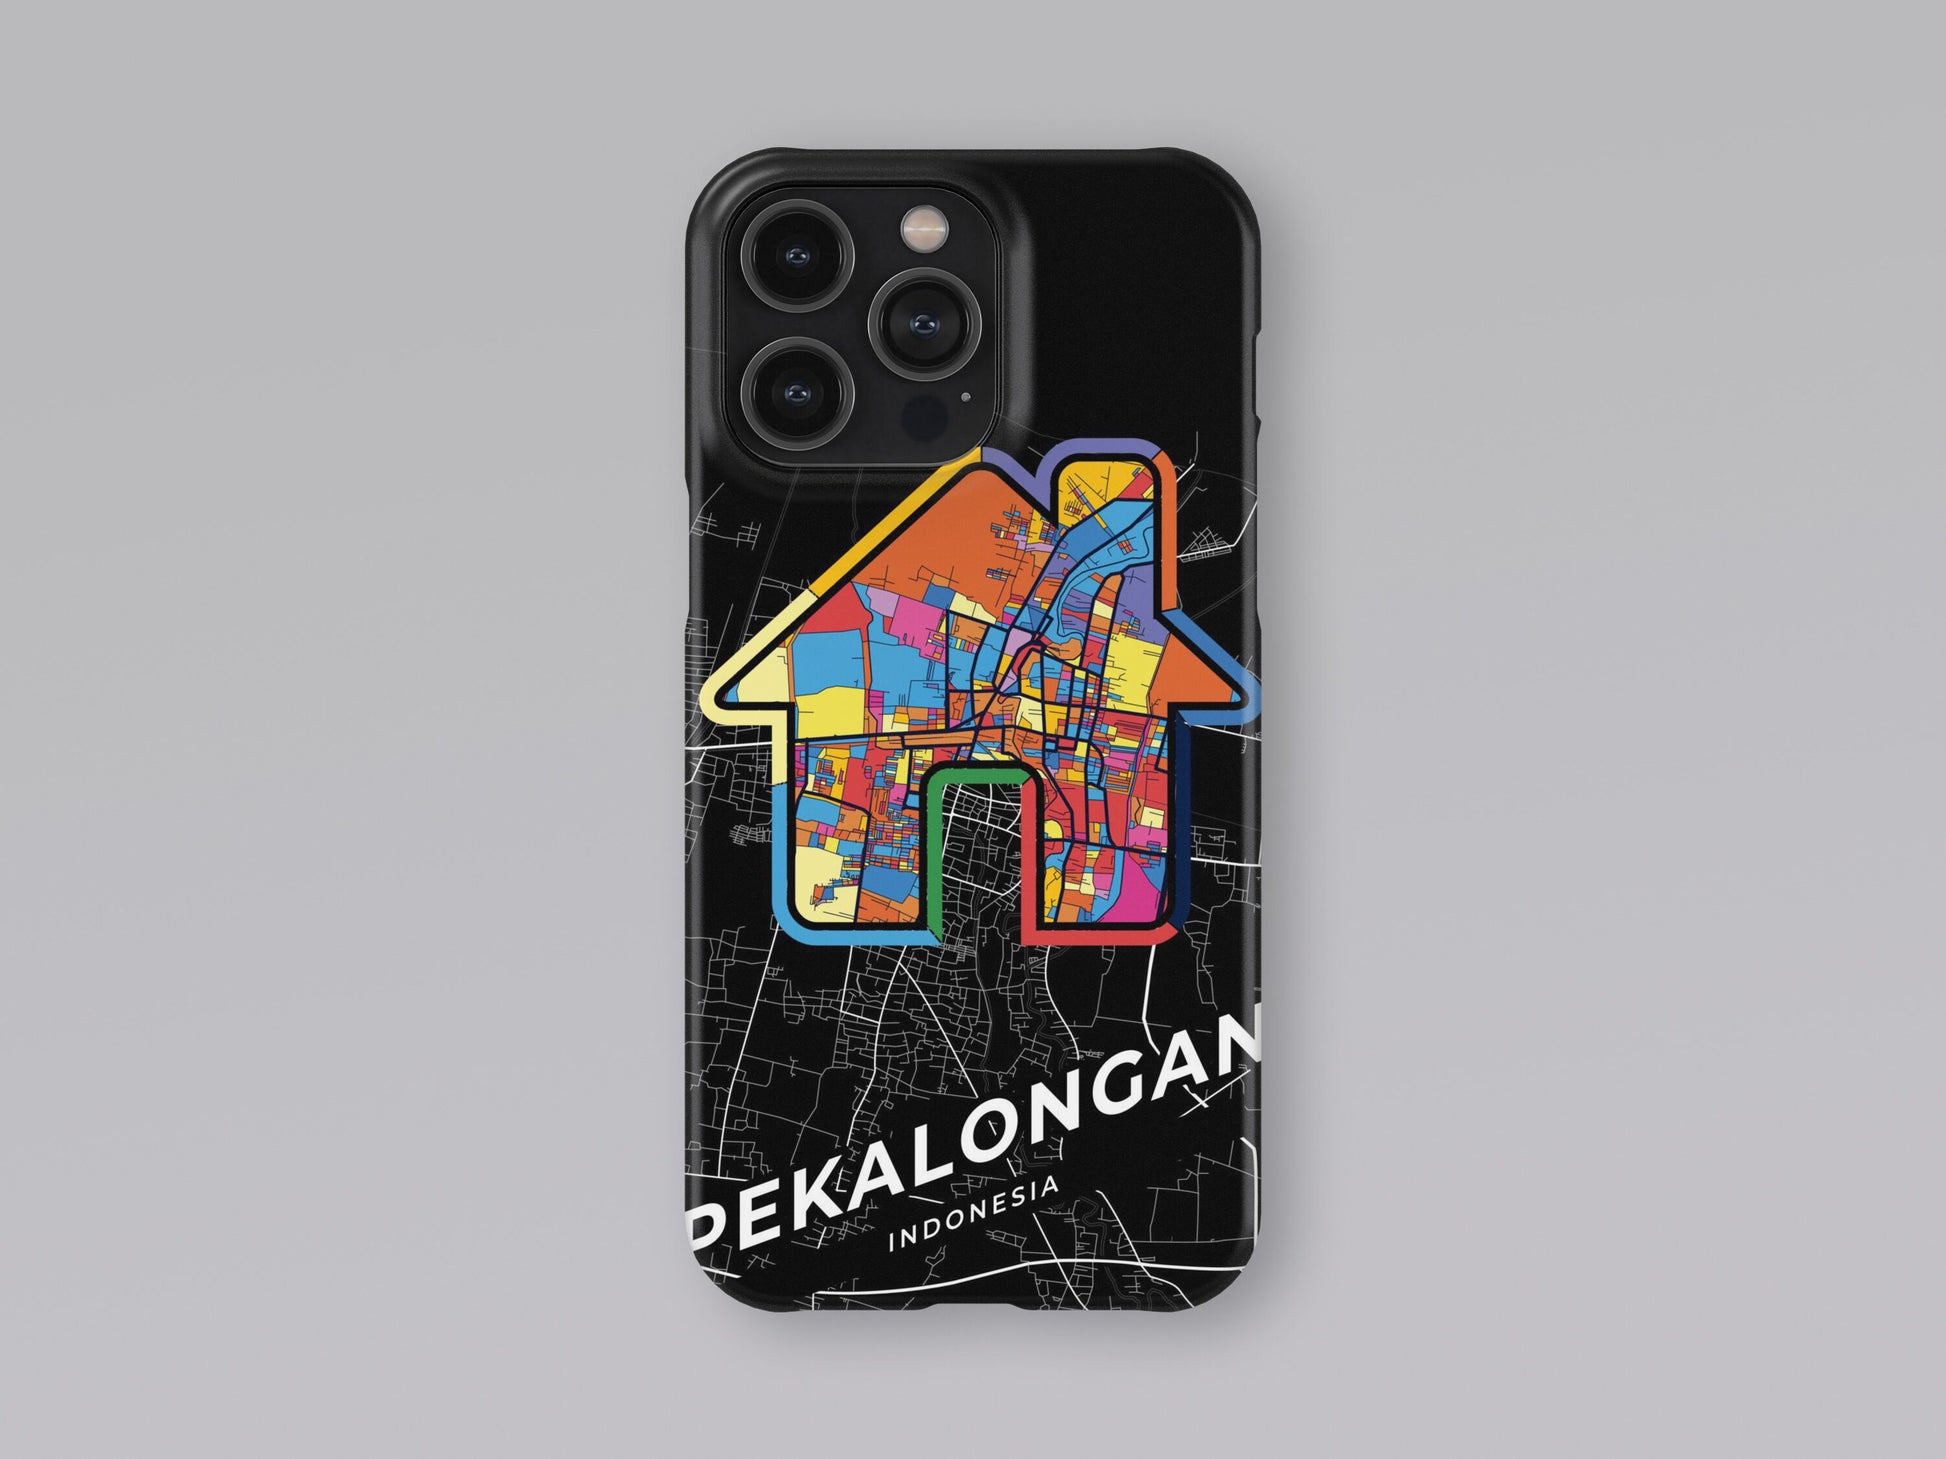 Pekalongan Indonesia slim phone case with colorful icon 3